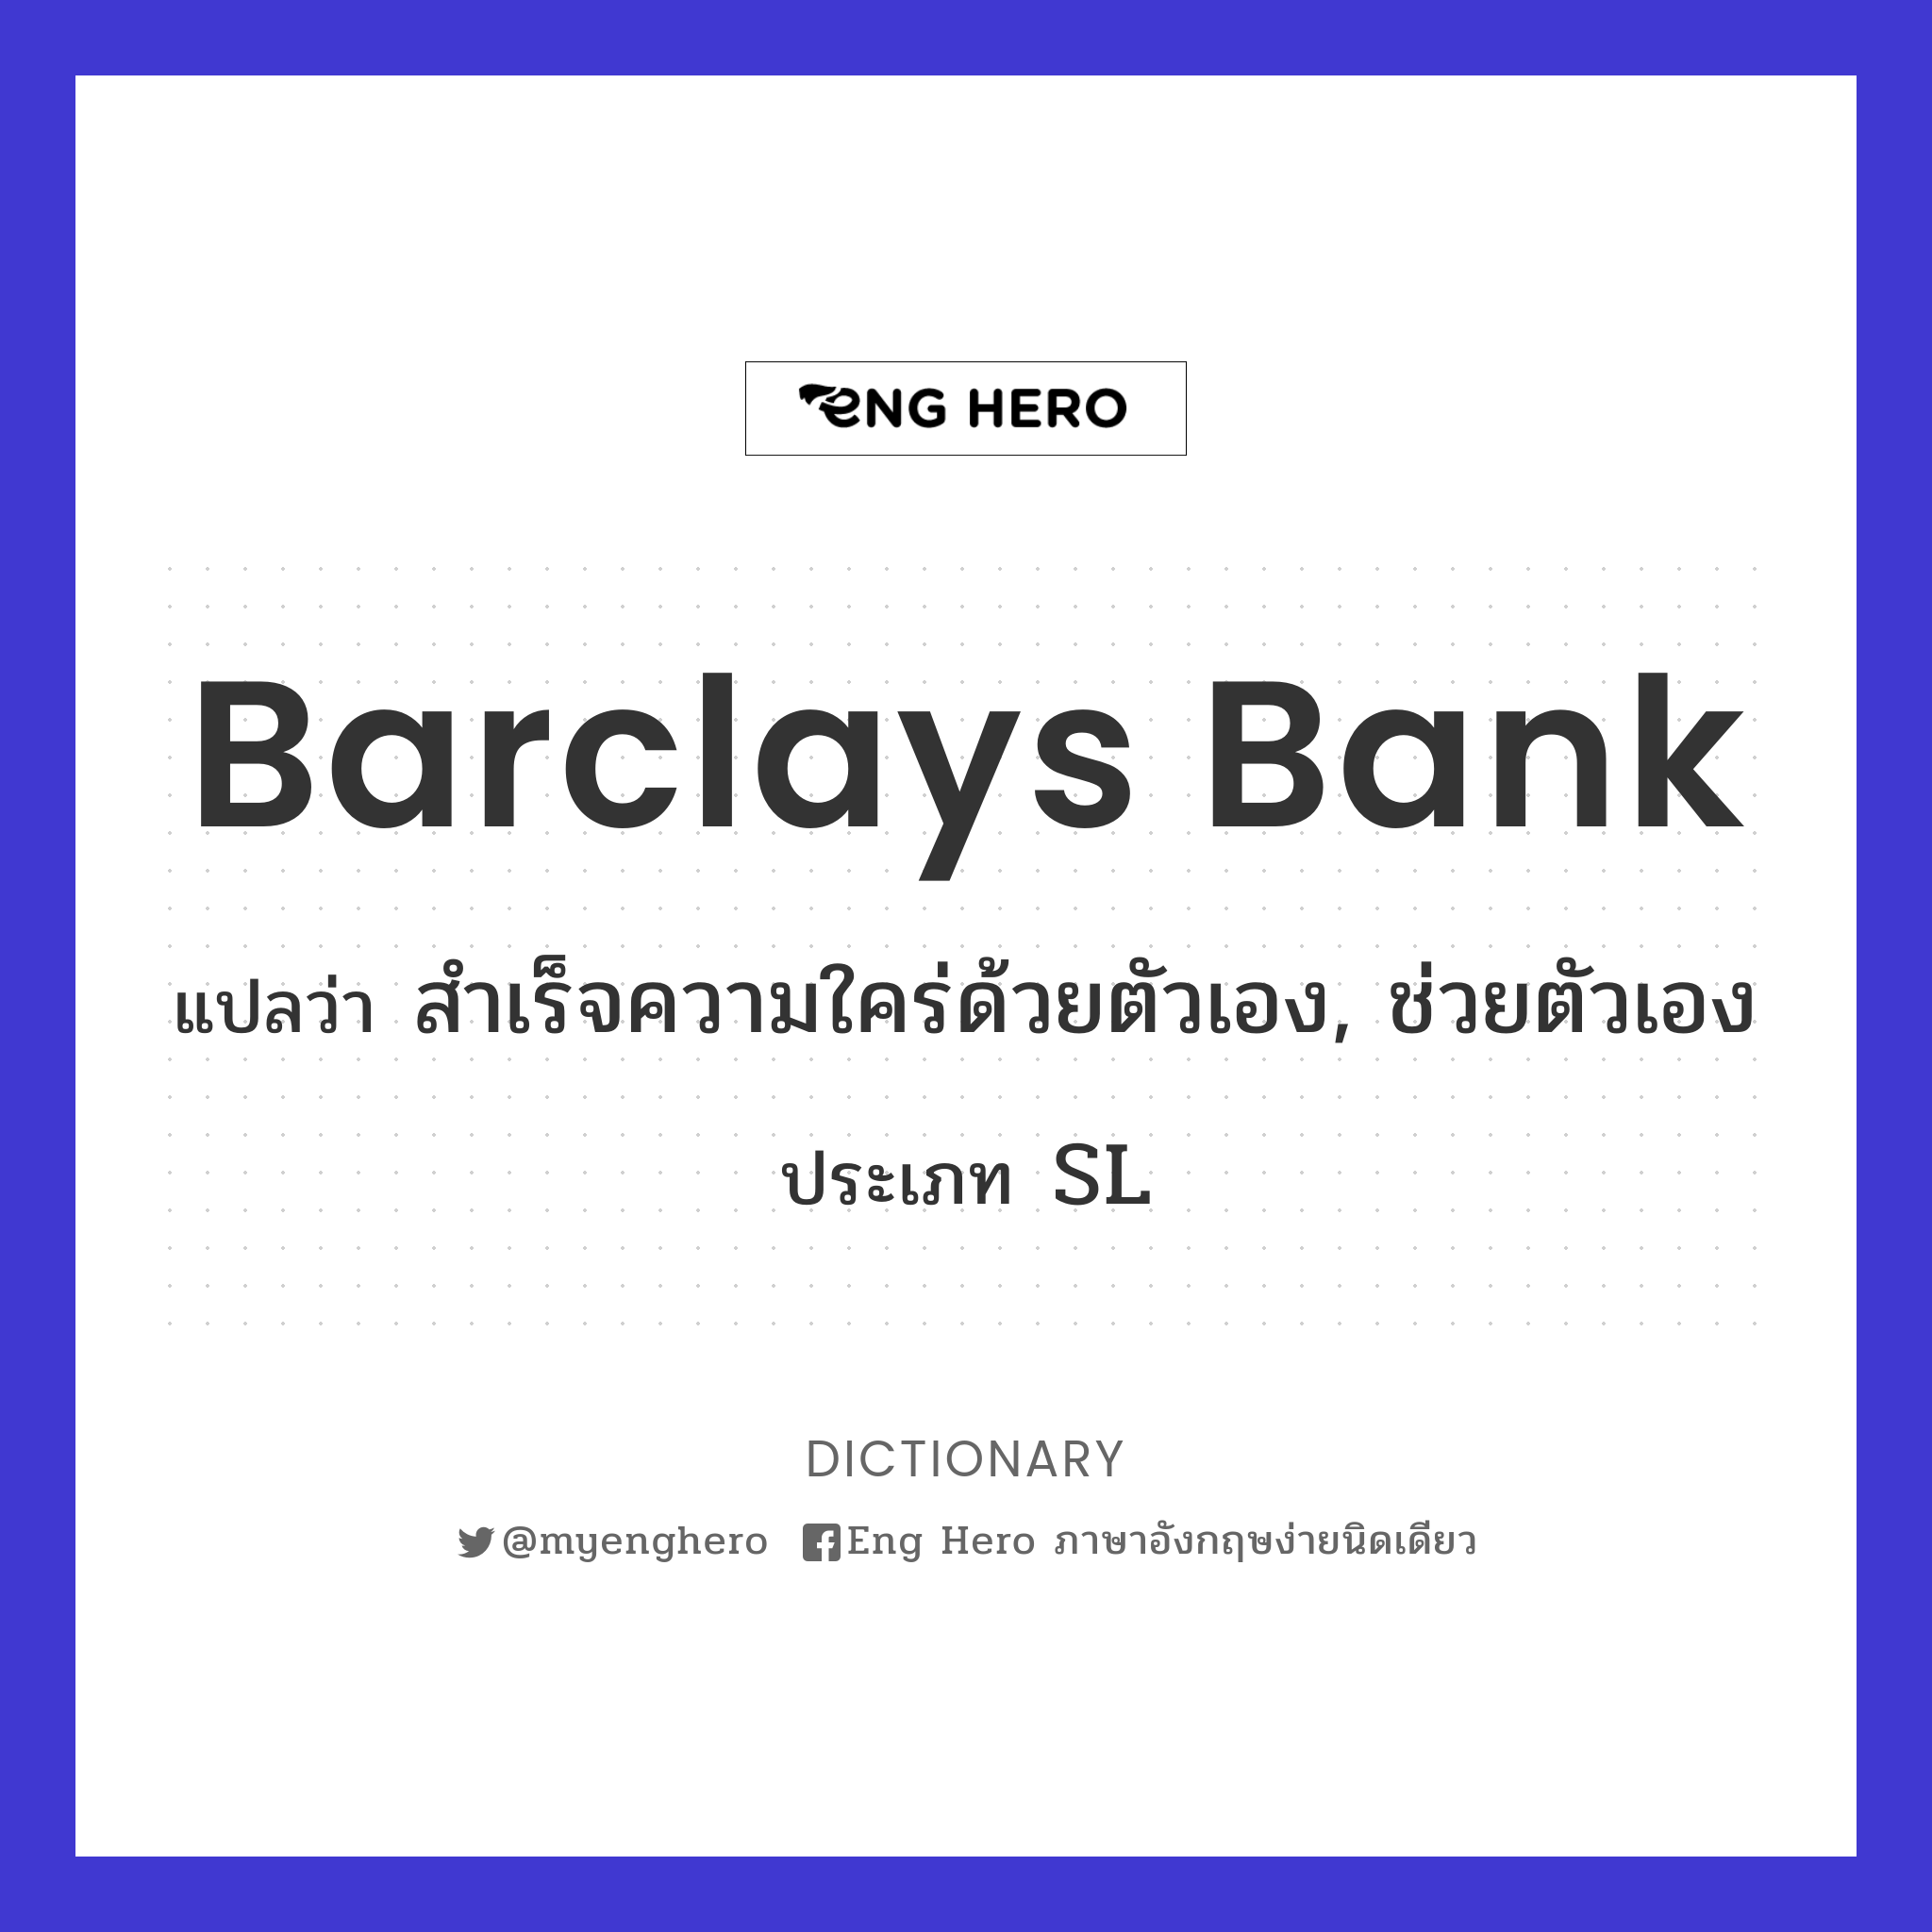 barclays bank